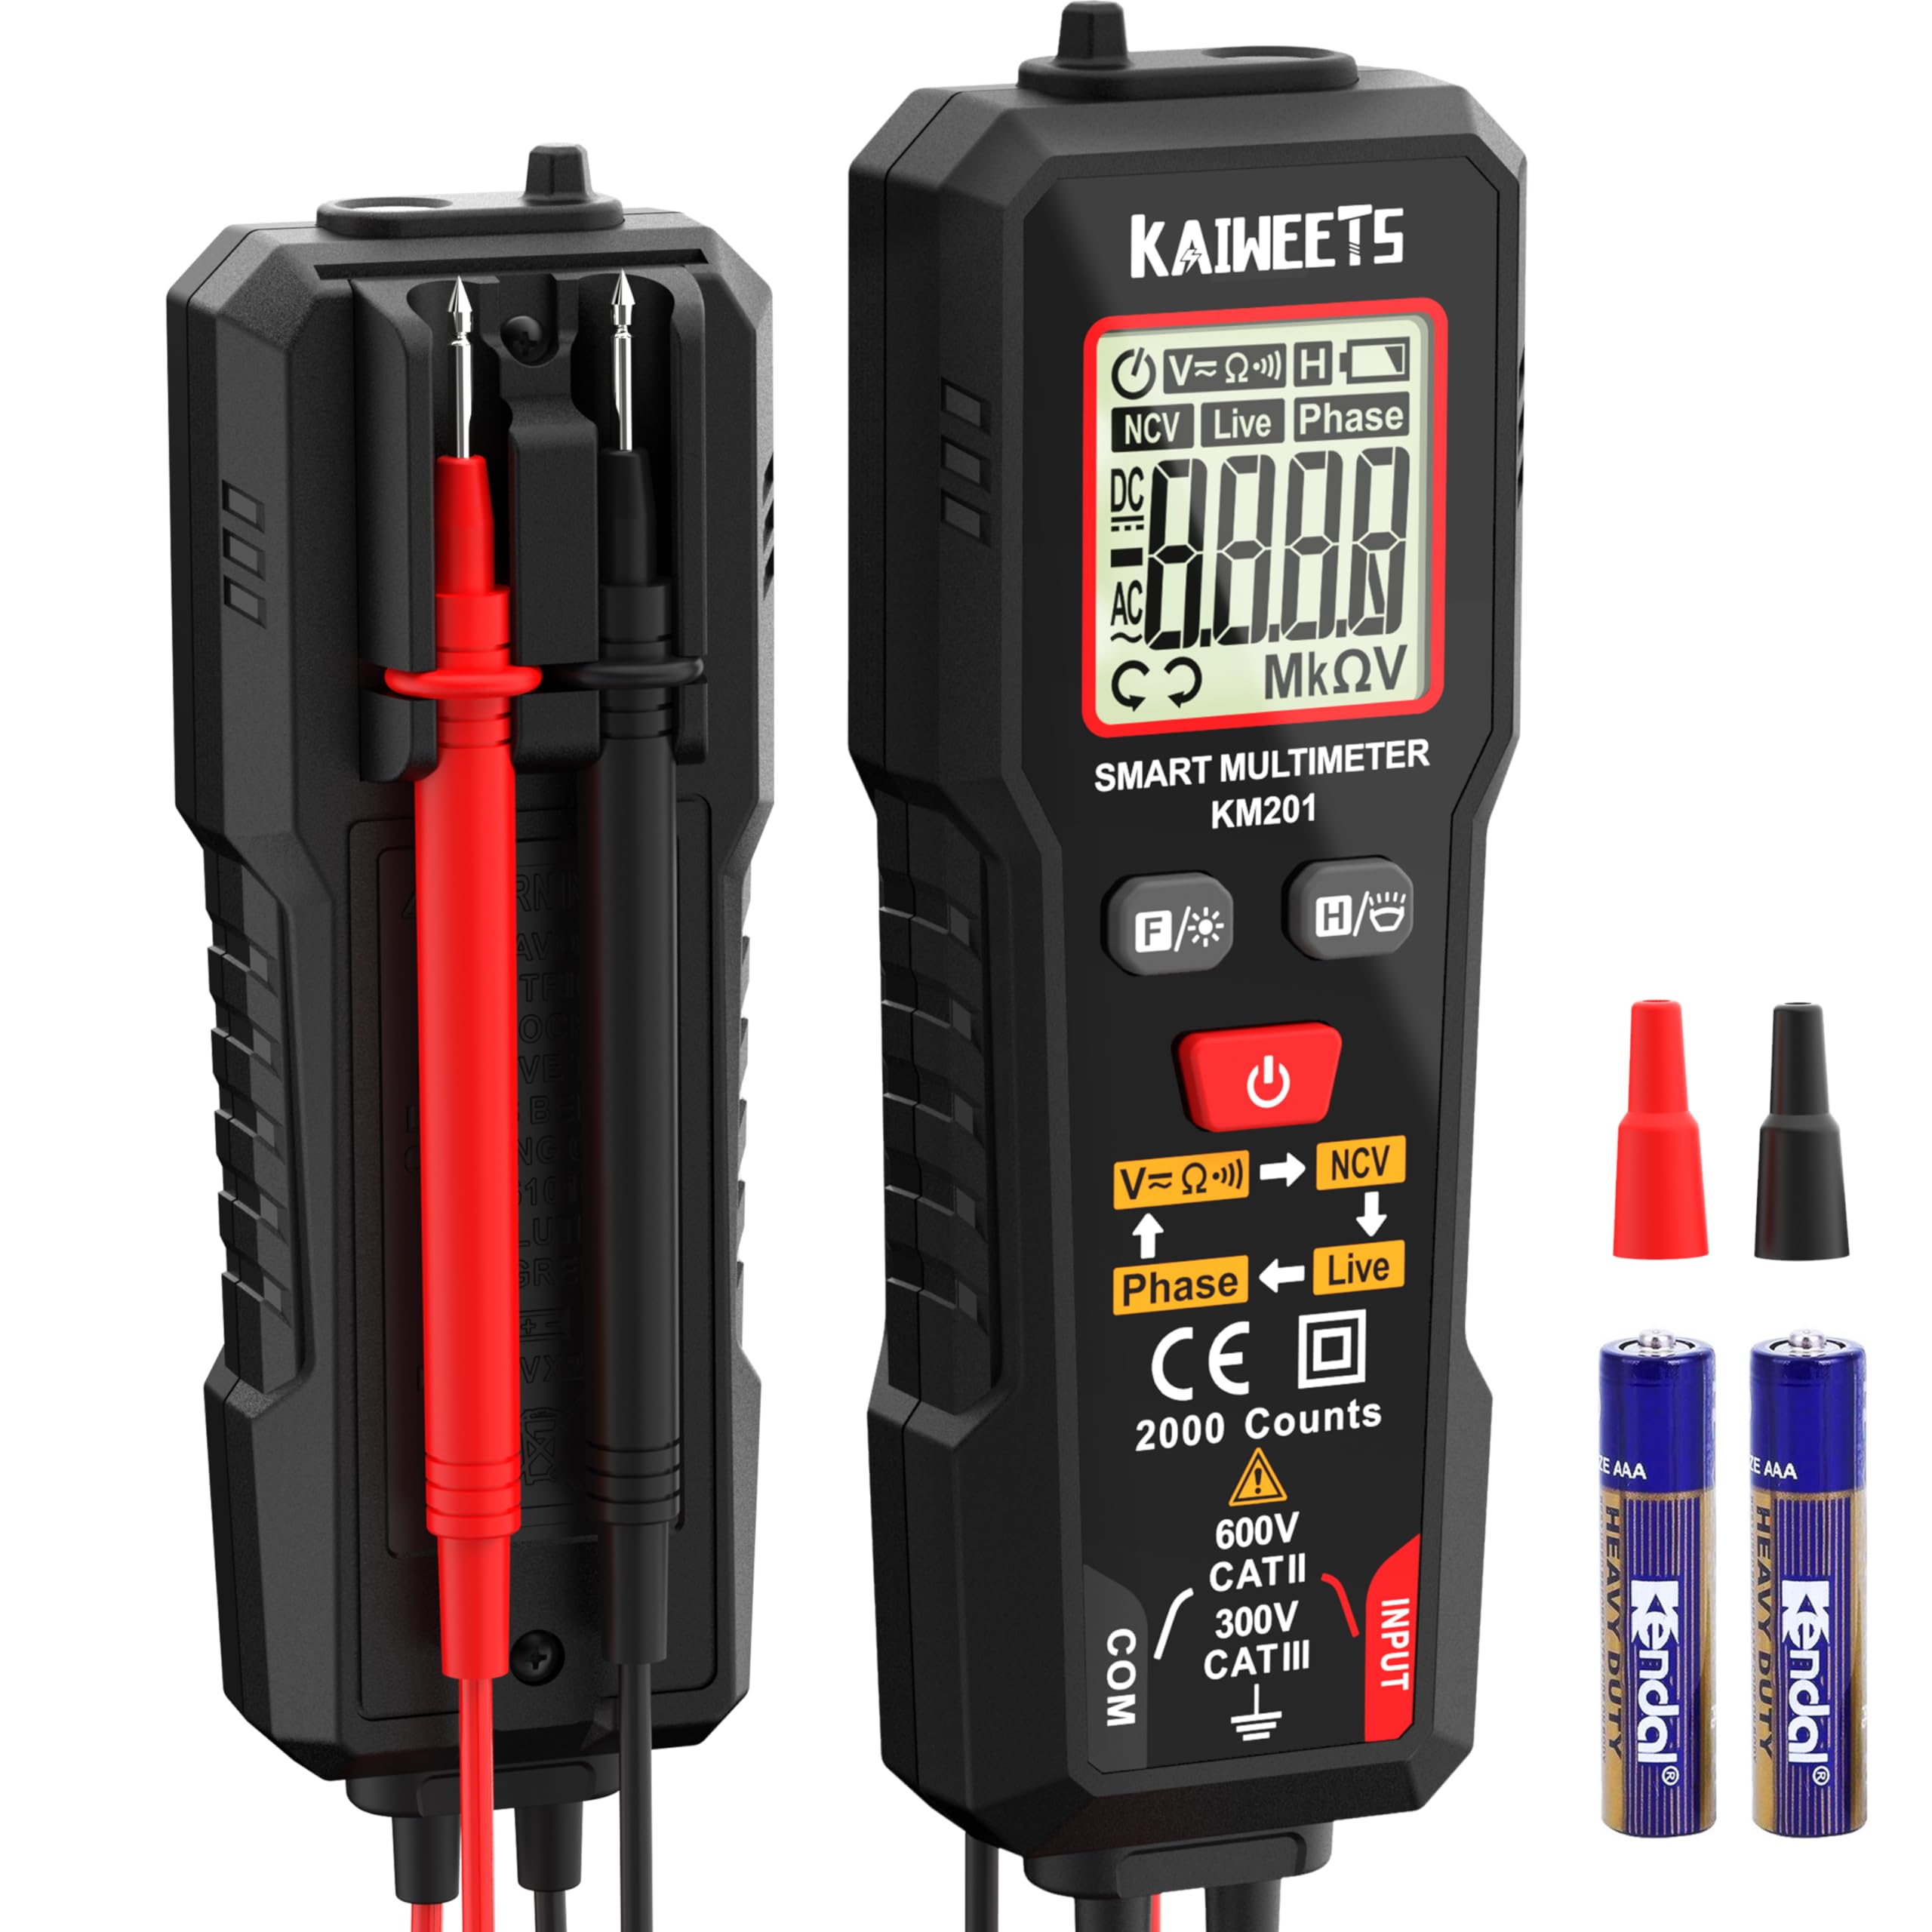 KAIWEETS スマートマルチメーター AC/DC電圧 位相シーケンス検出 導通 抵抗測定 NCV/活線チェック 2000カウント 小型…